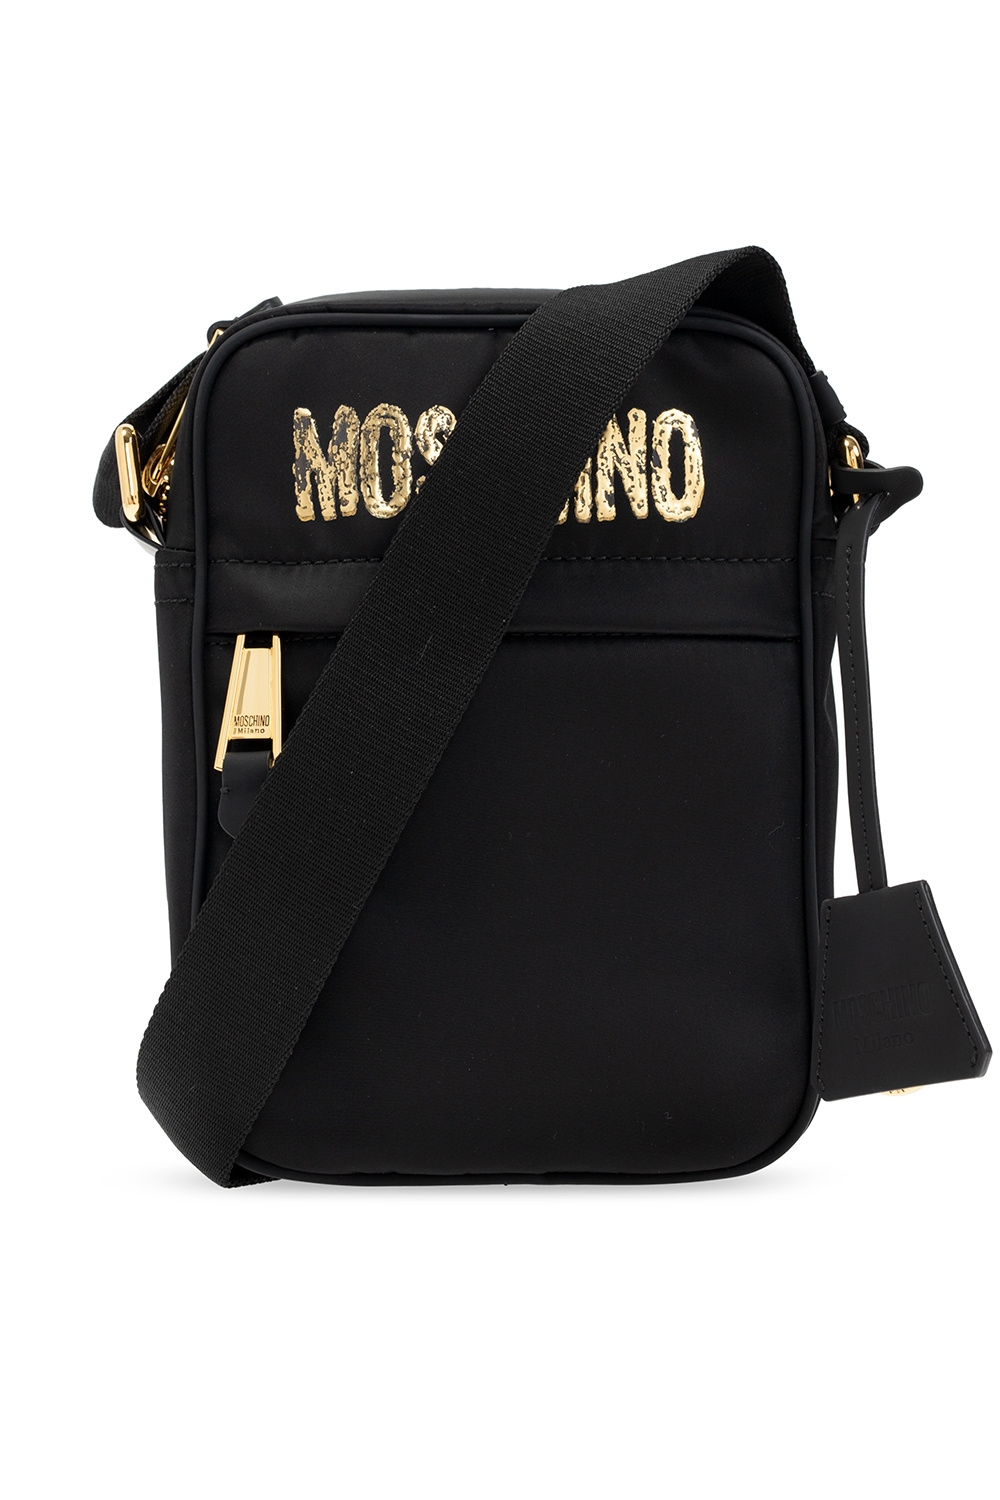 Black Logo-printed handbag Moschino - Vitkac Italy